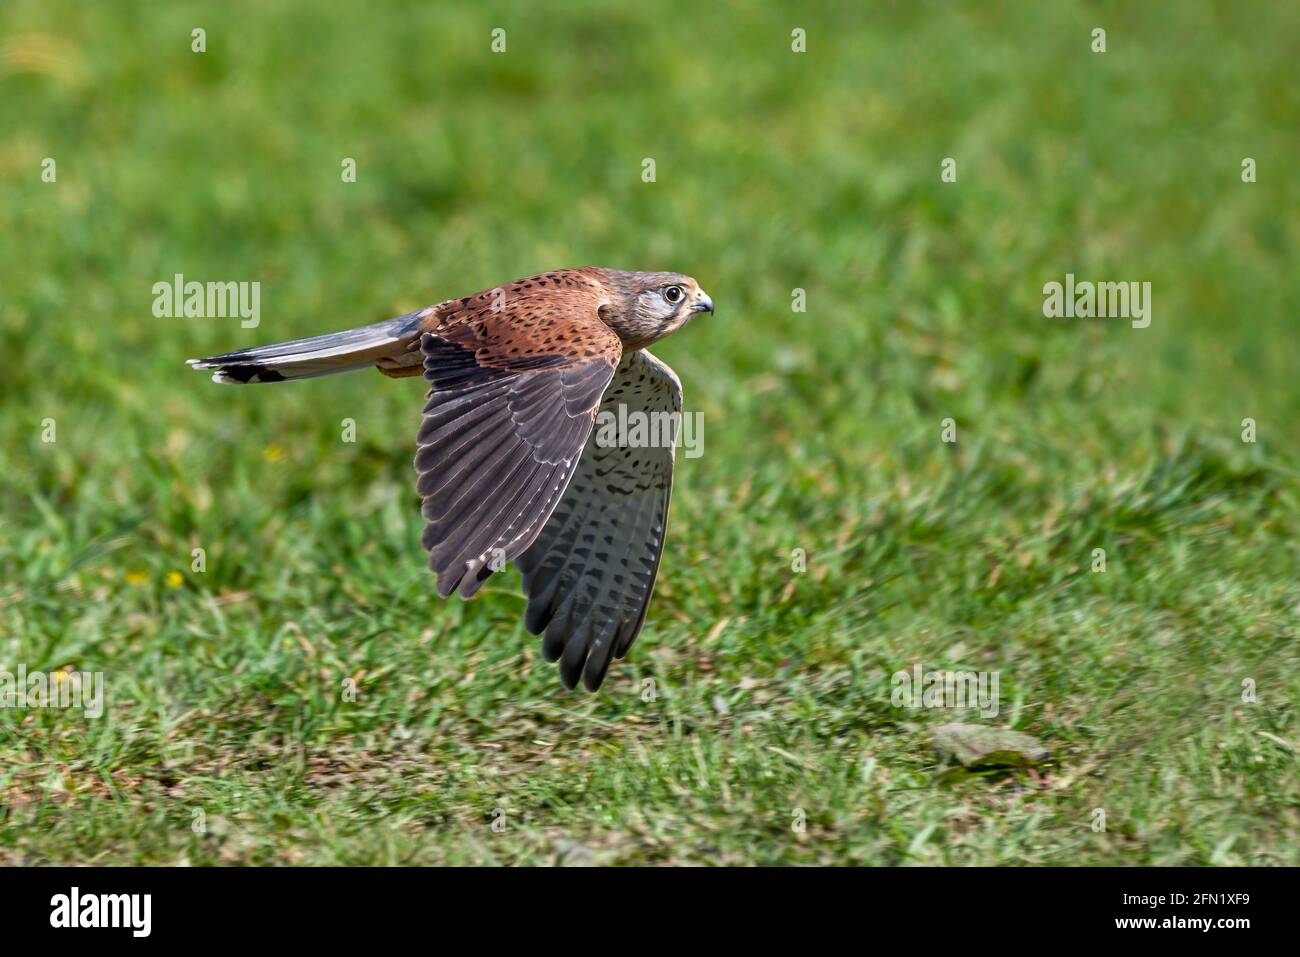 Kestrel (Falco tinnunculus) bird of prey flying low in flight over a grass field, stock photo image Stock Photo